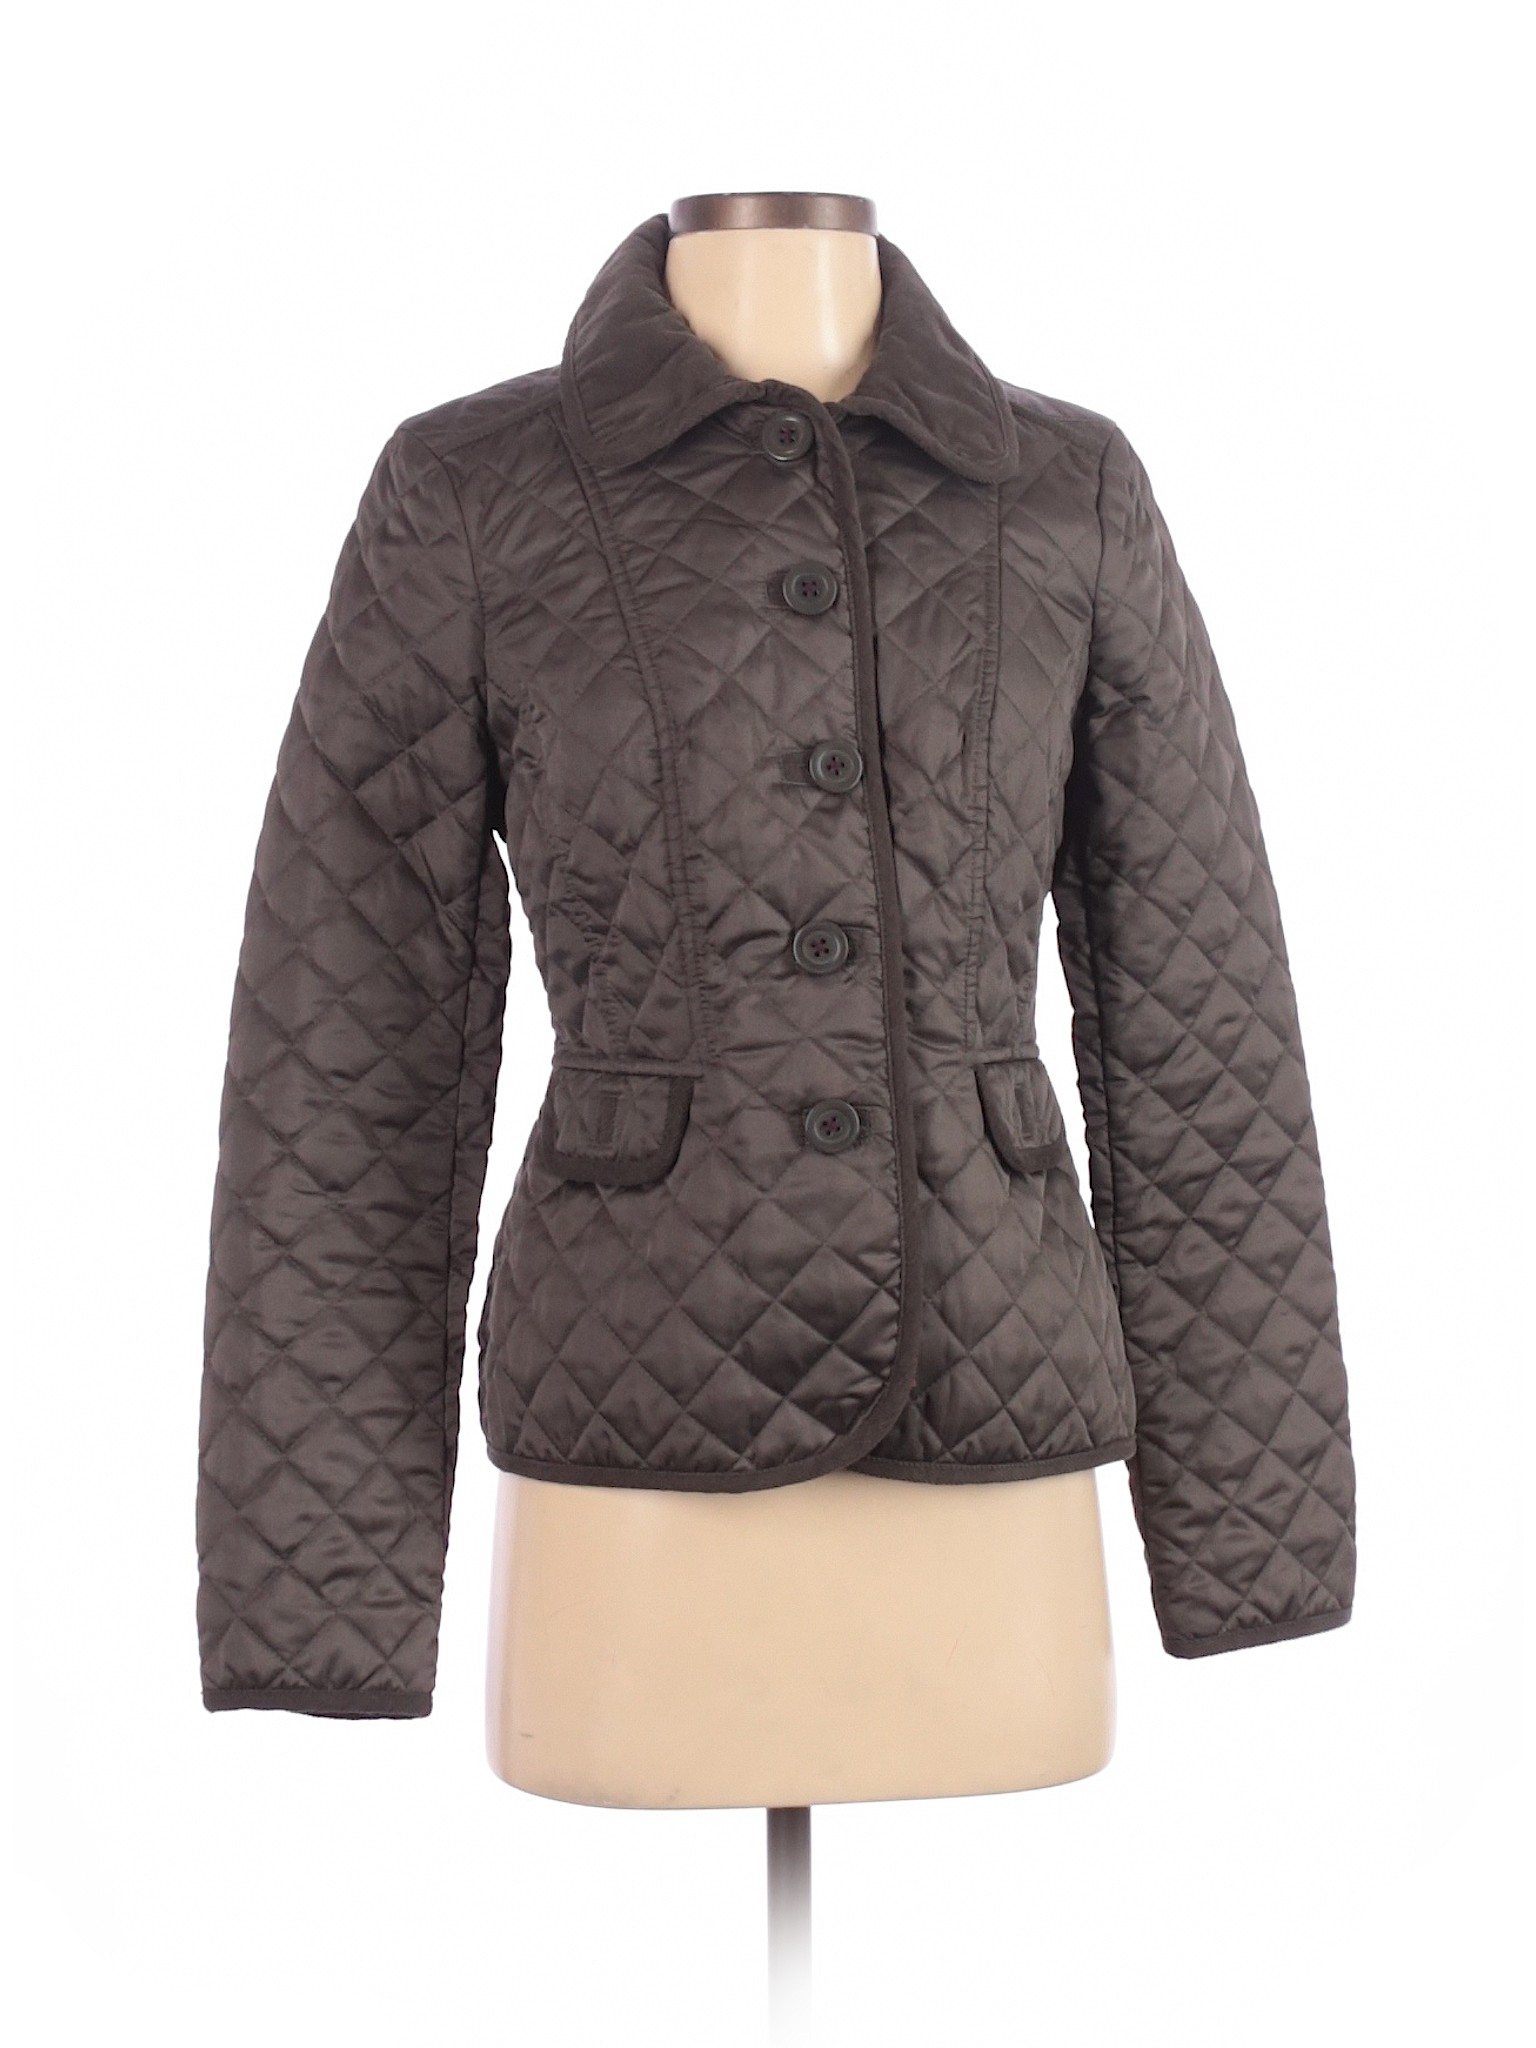 Boden Women Gray Coat 4 | eBay